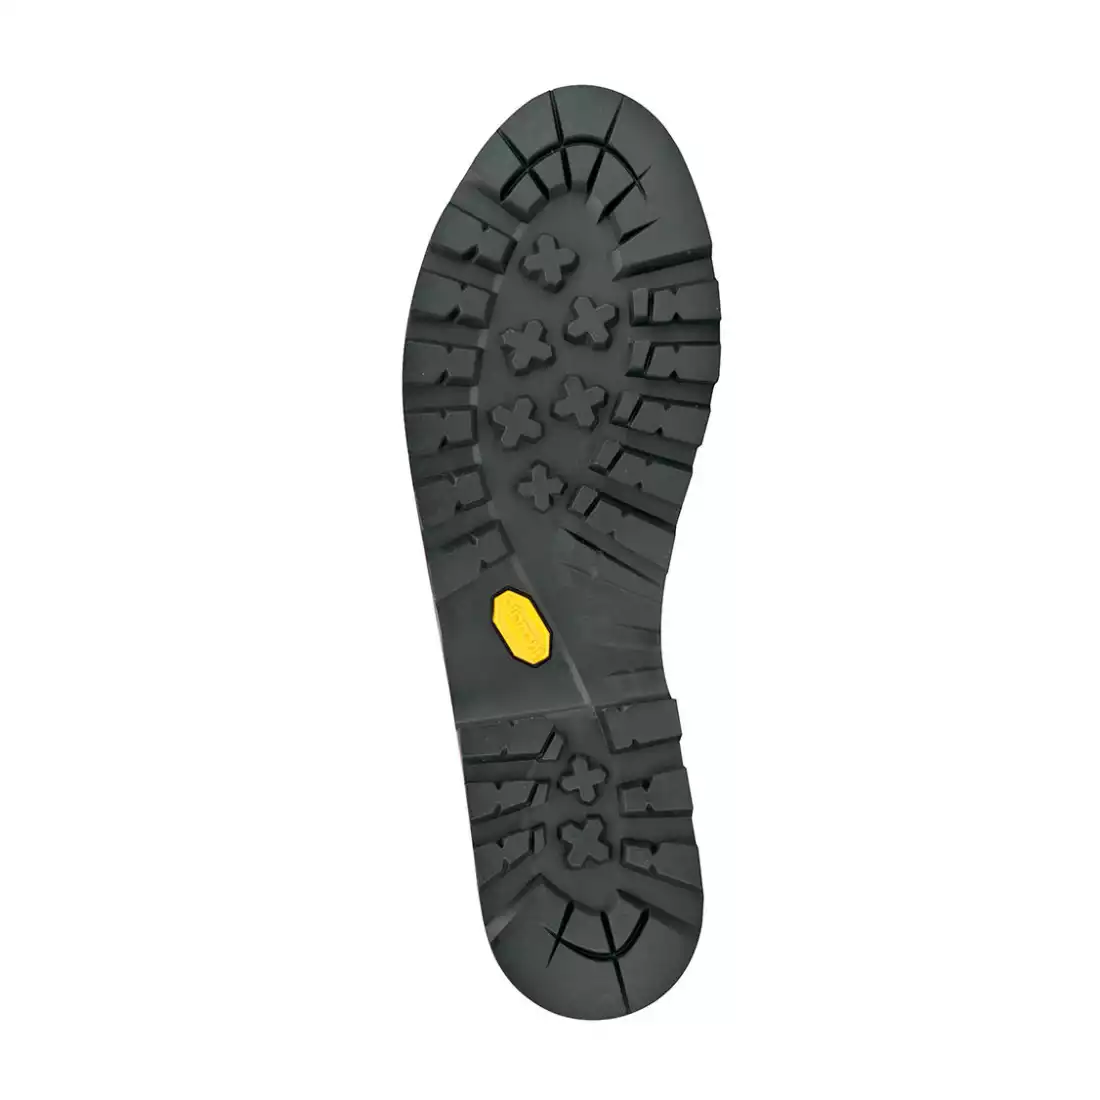 KAYLAND CROSS MOUNTAIN GTX Pantofi de trekking pentru bărbați, GORE-TEX, VIBRAM, negru și var